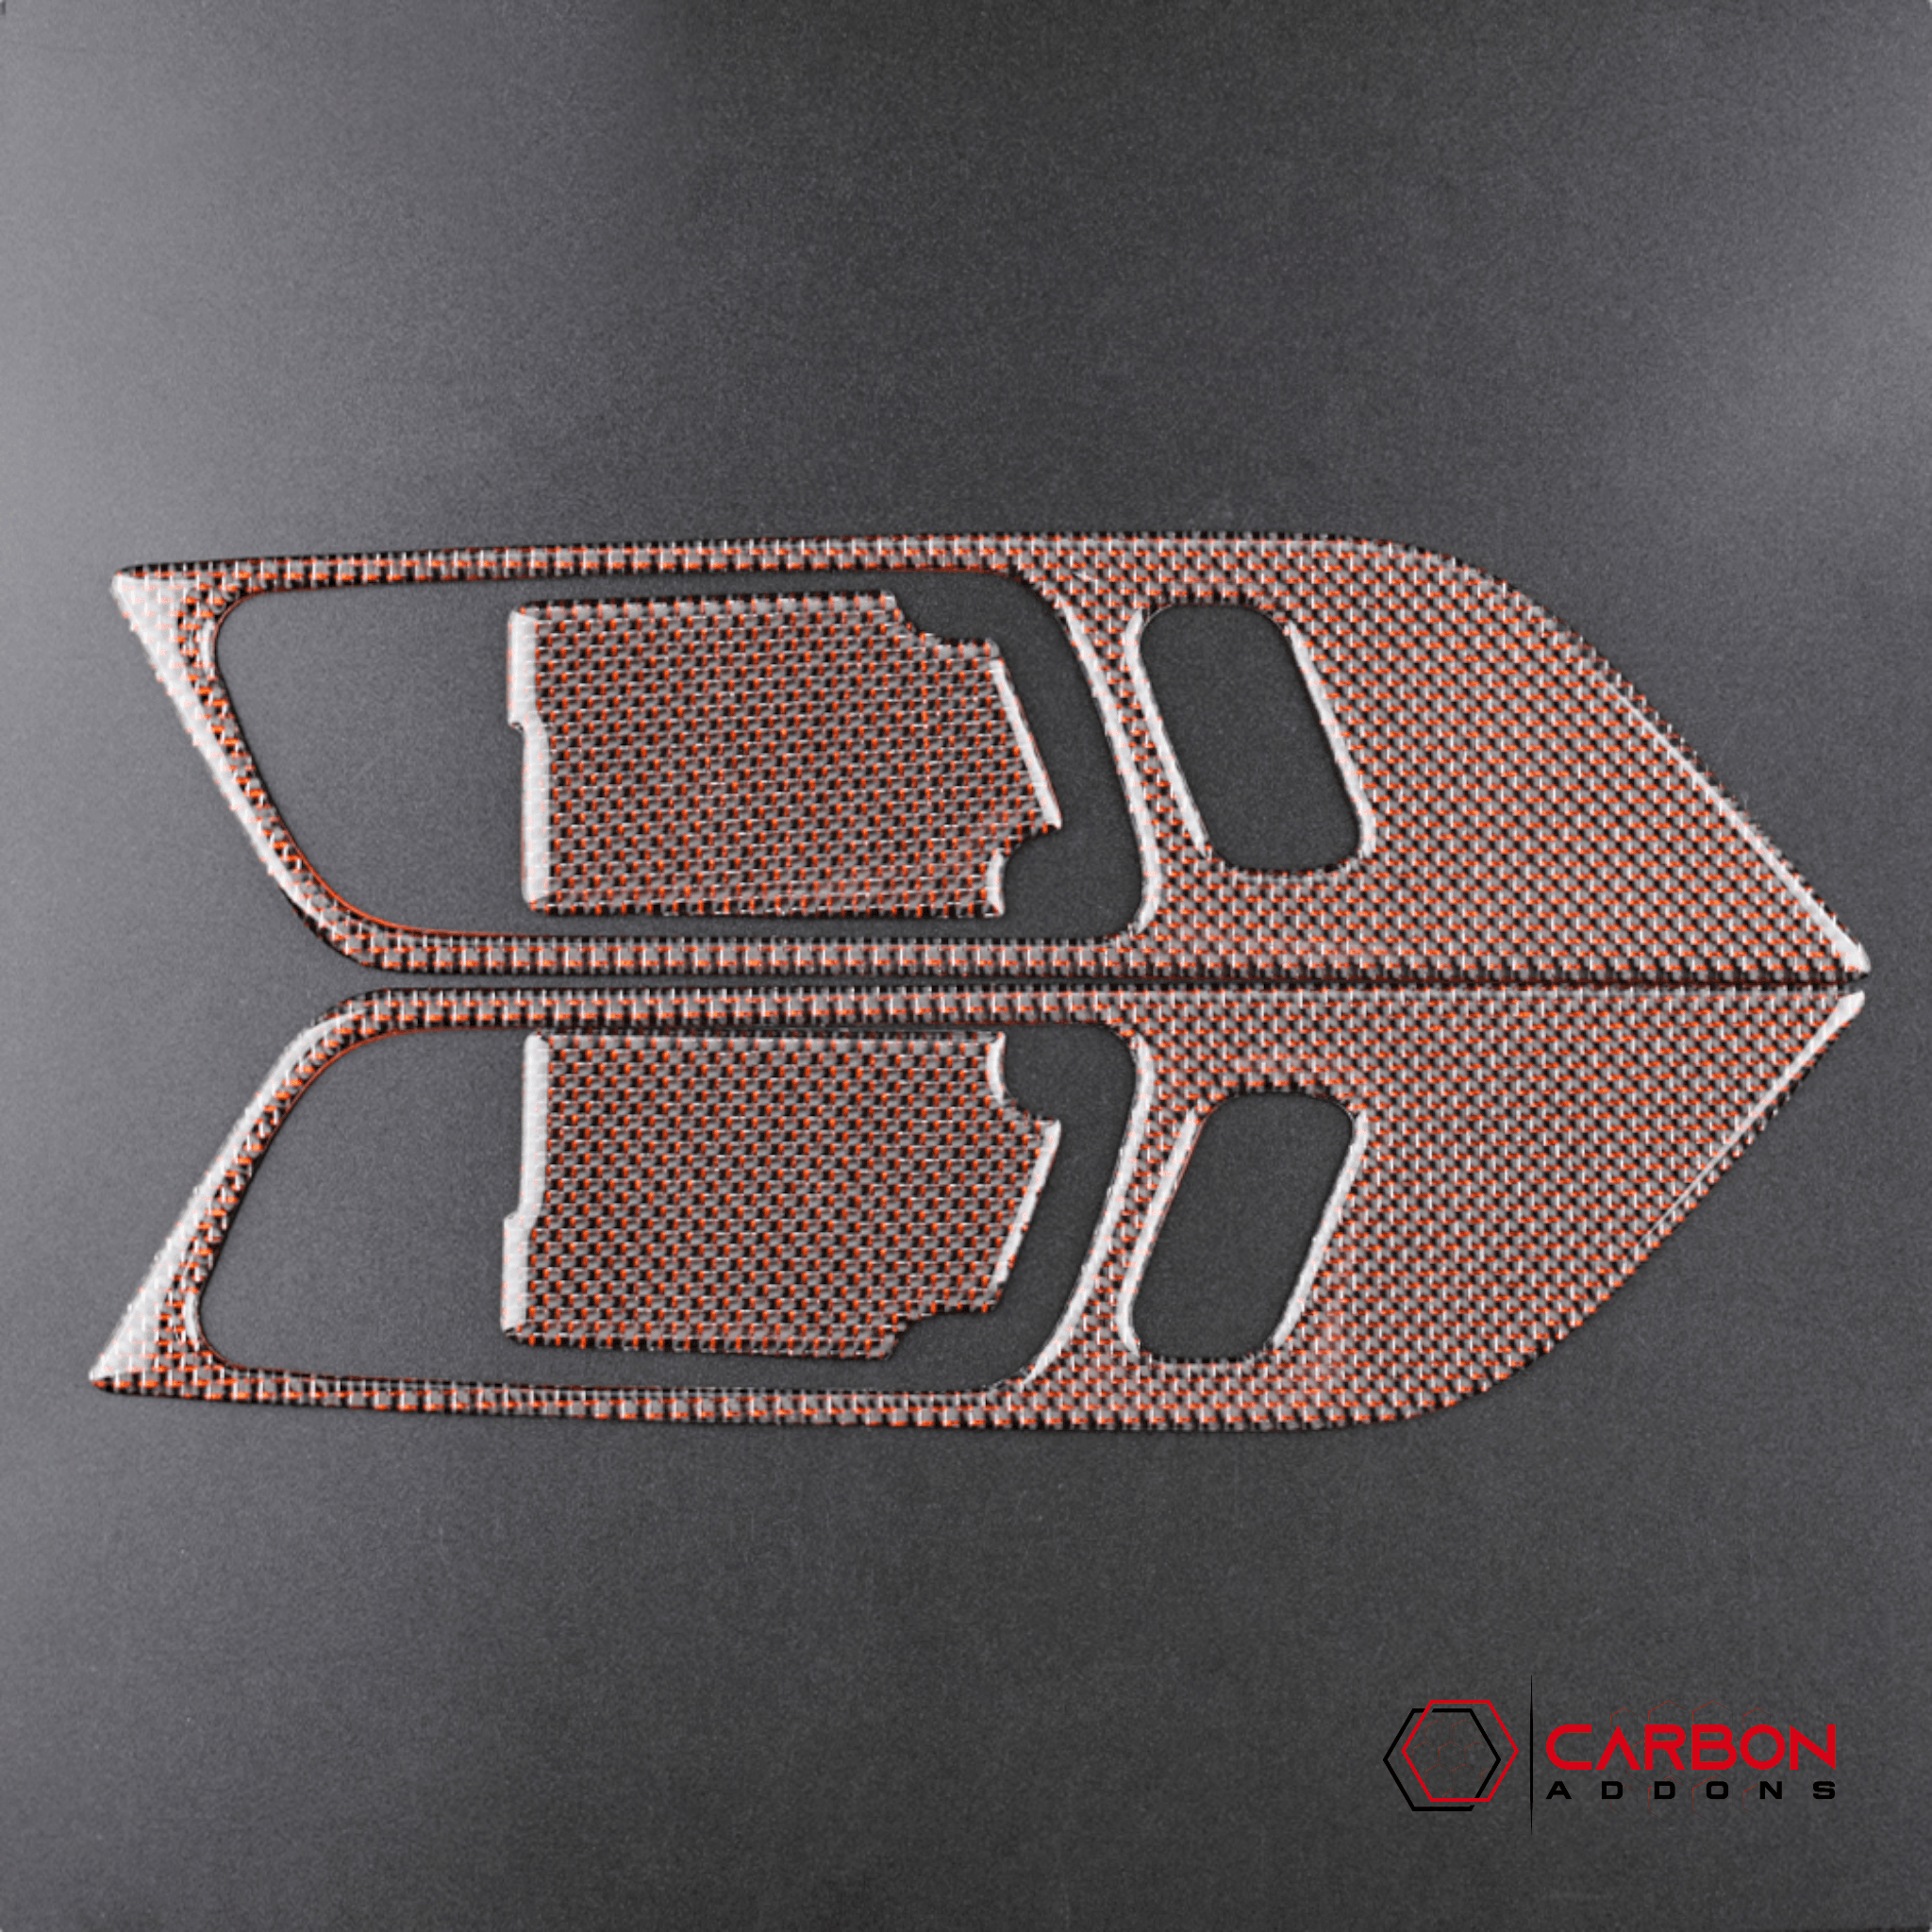 Reflective Carbon Fiber Interior Door Handle Trim Overlay for Ford Mustang 2015-2023 - carbonaddons Carbon Fiber Parts, Accessories, Upgrades, Mods